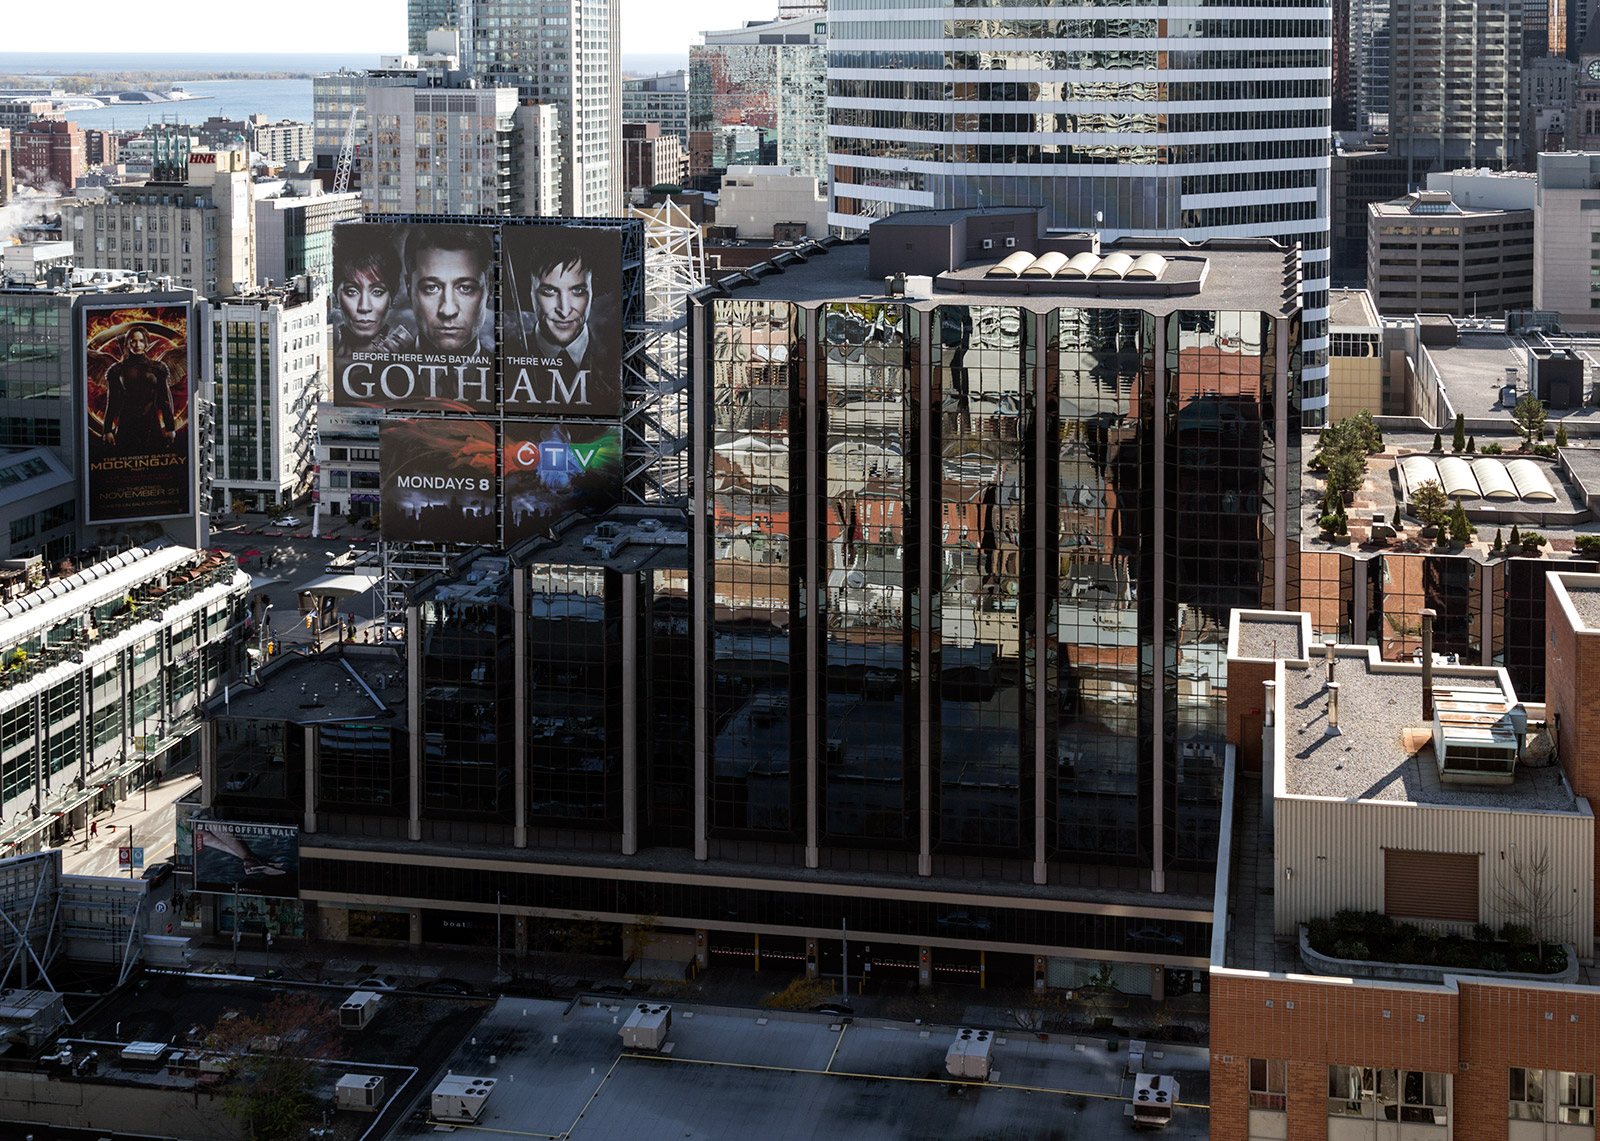 20141125. Billboards as big as buildings: Gotham versus Atrium o